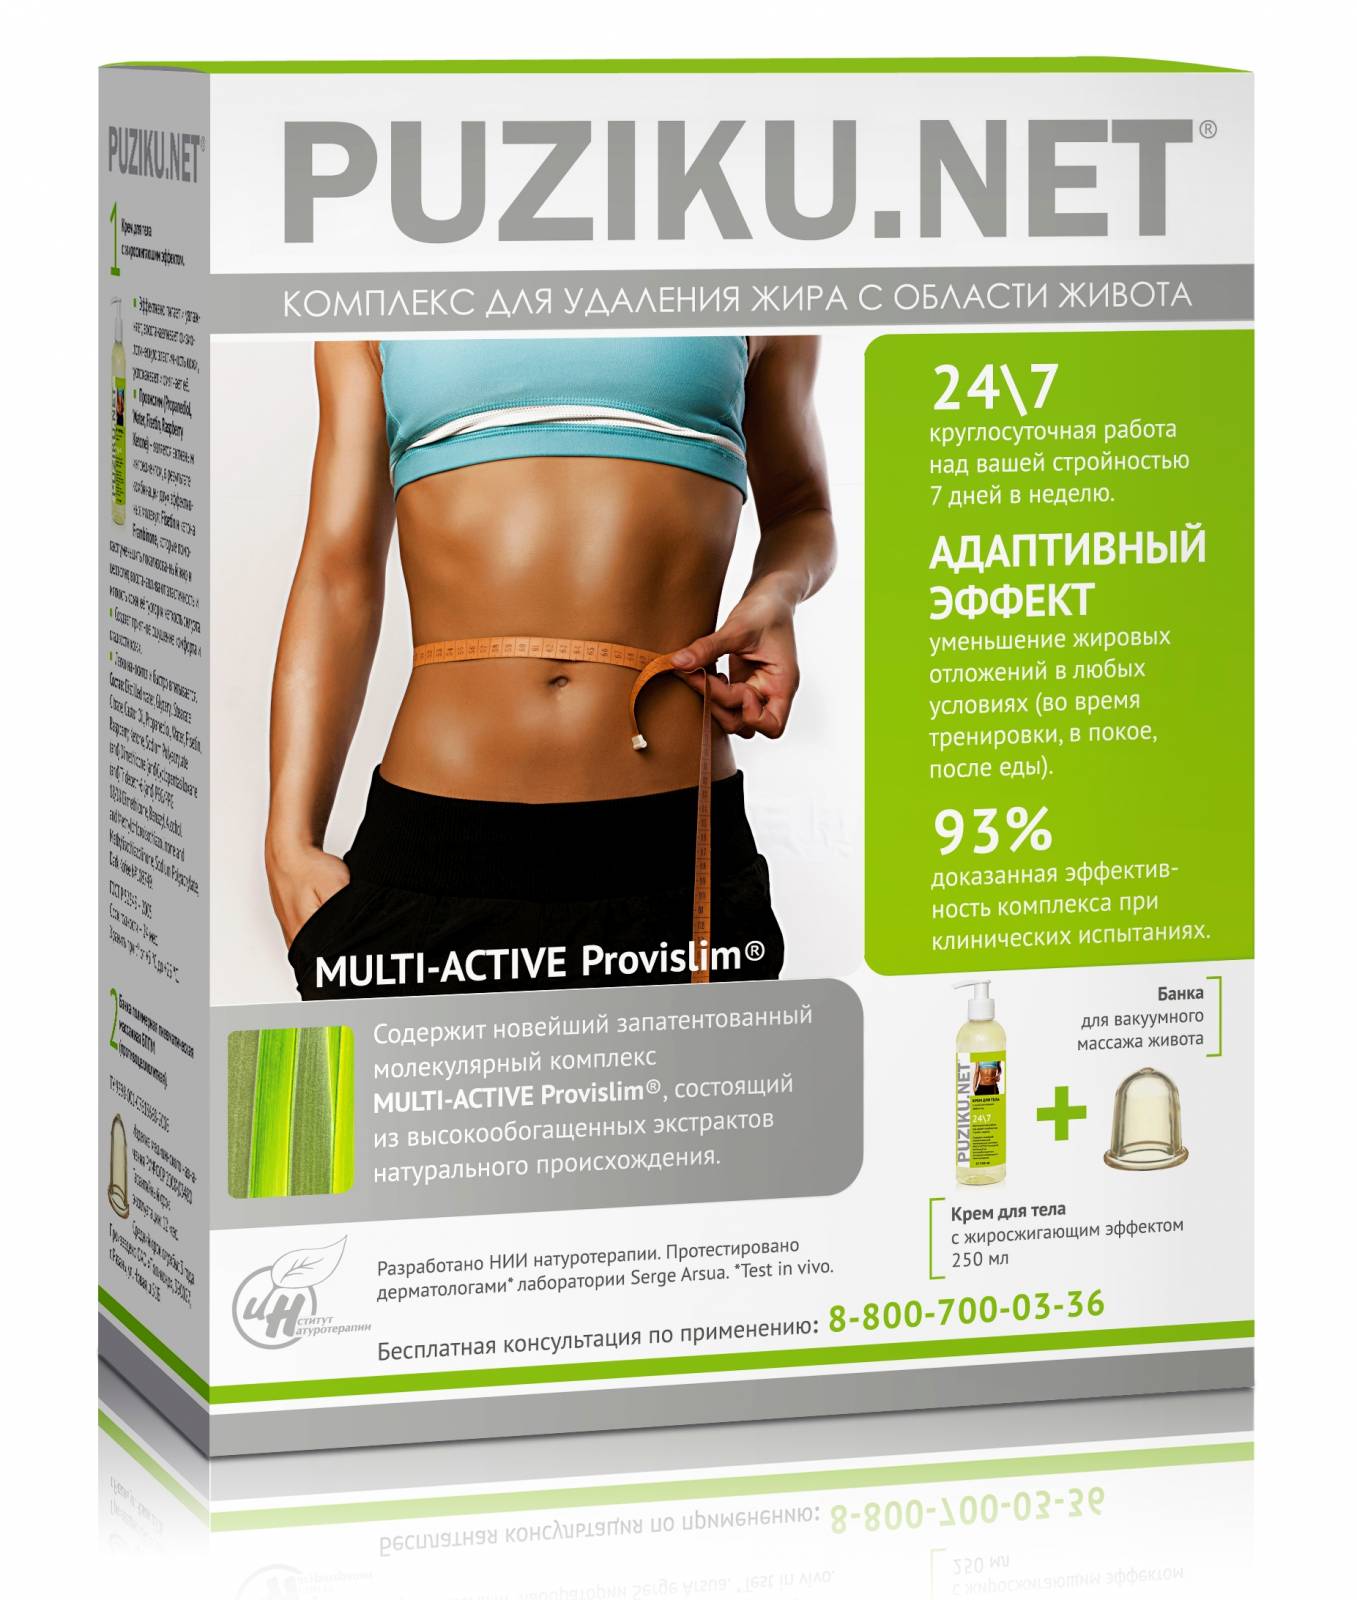  «Комплекс для удаления жира с области живота "Puziku.Net"» - Снижение веса